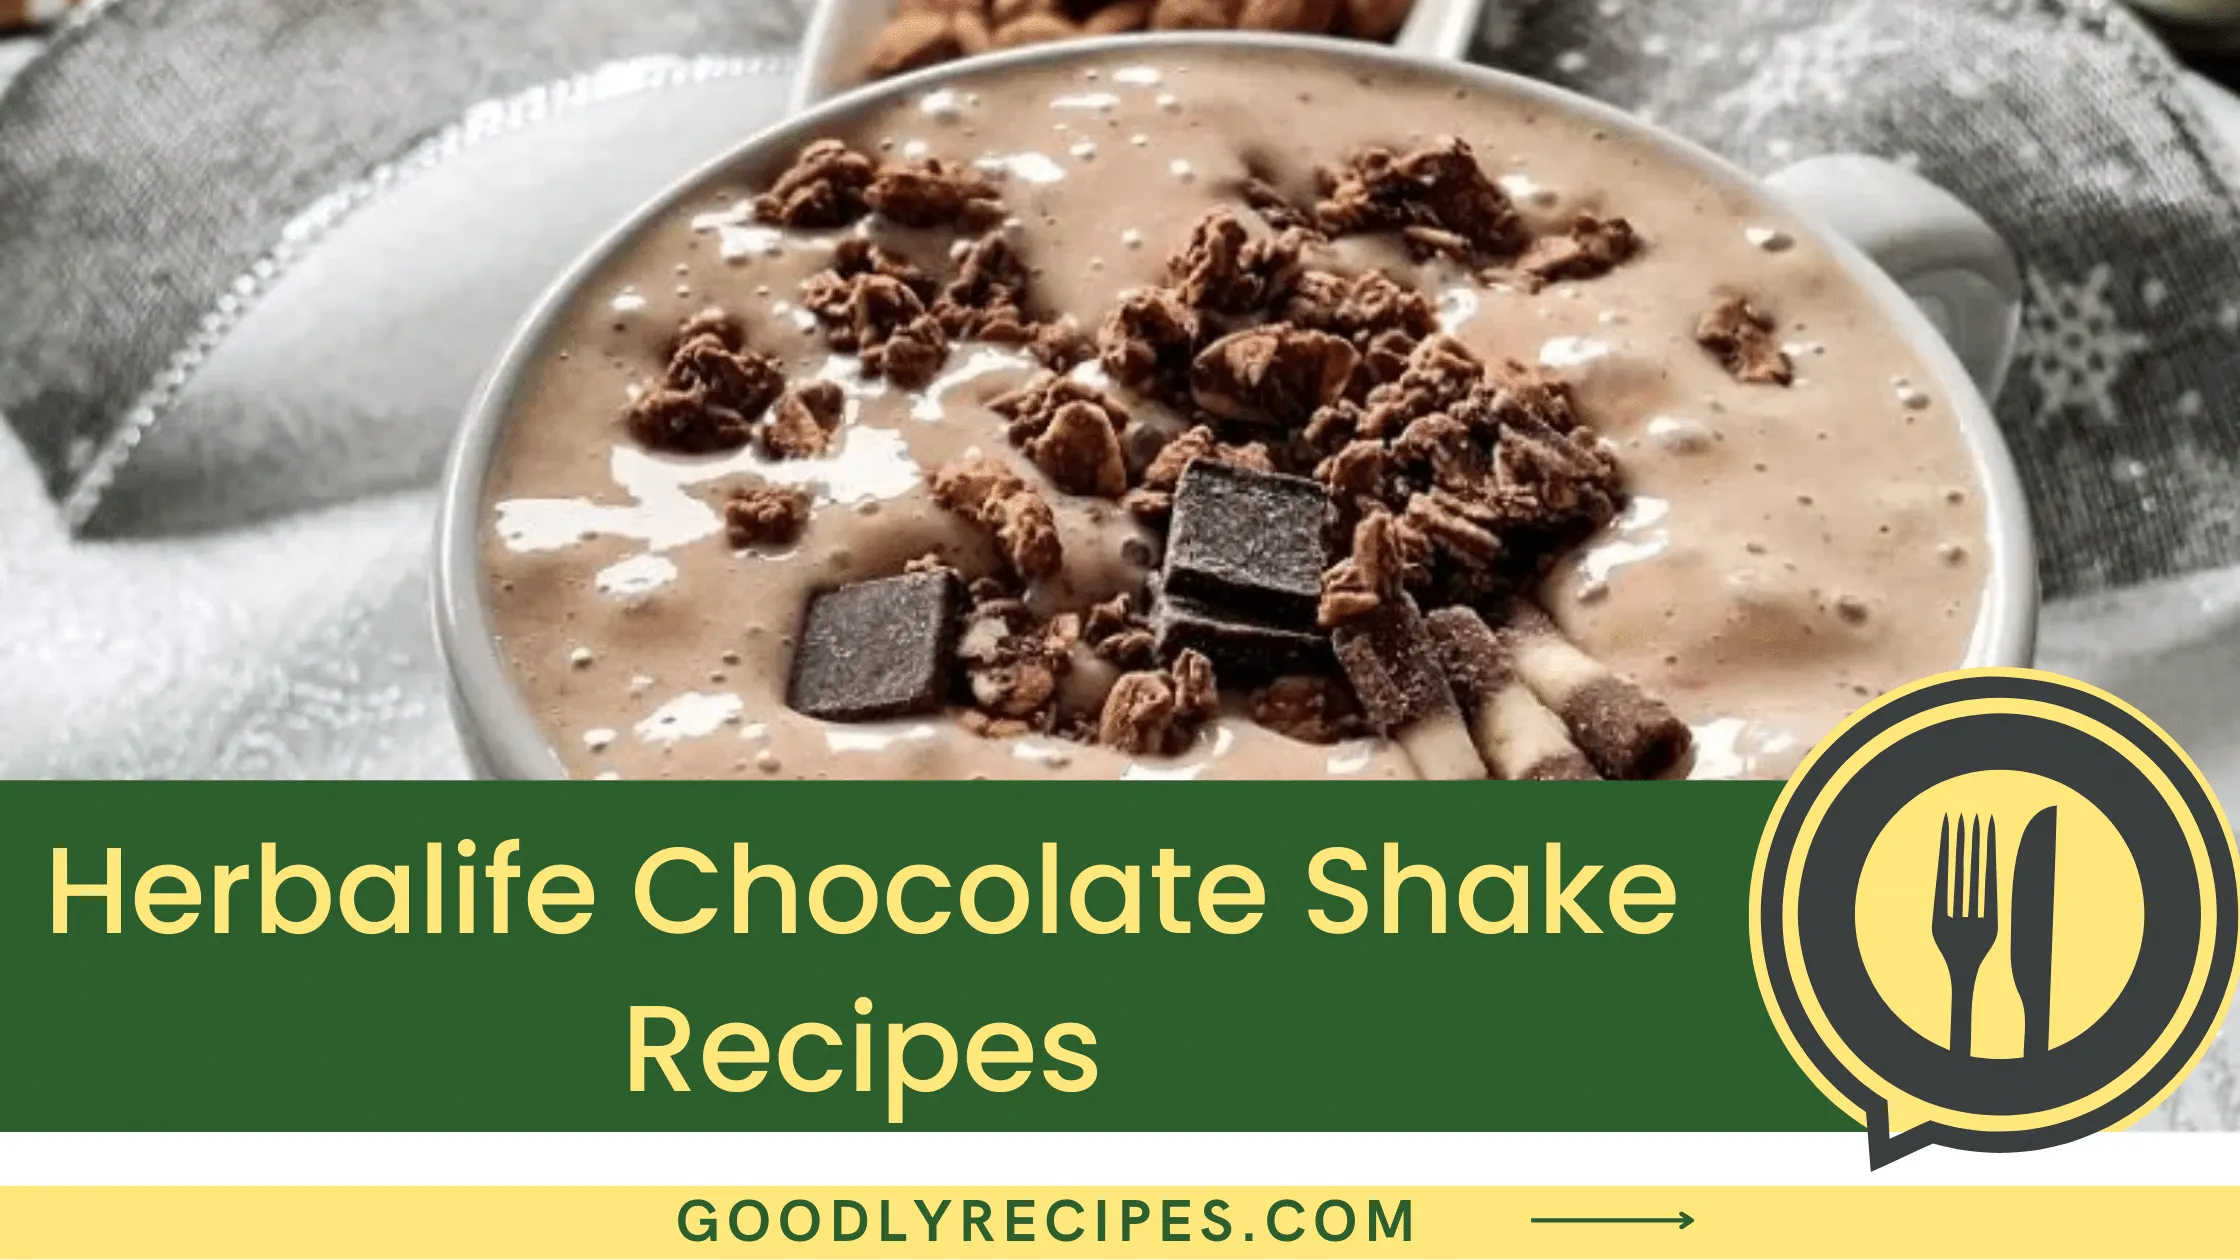 Herbalife Chocolate Shake Recipe - For Food Lovers